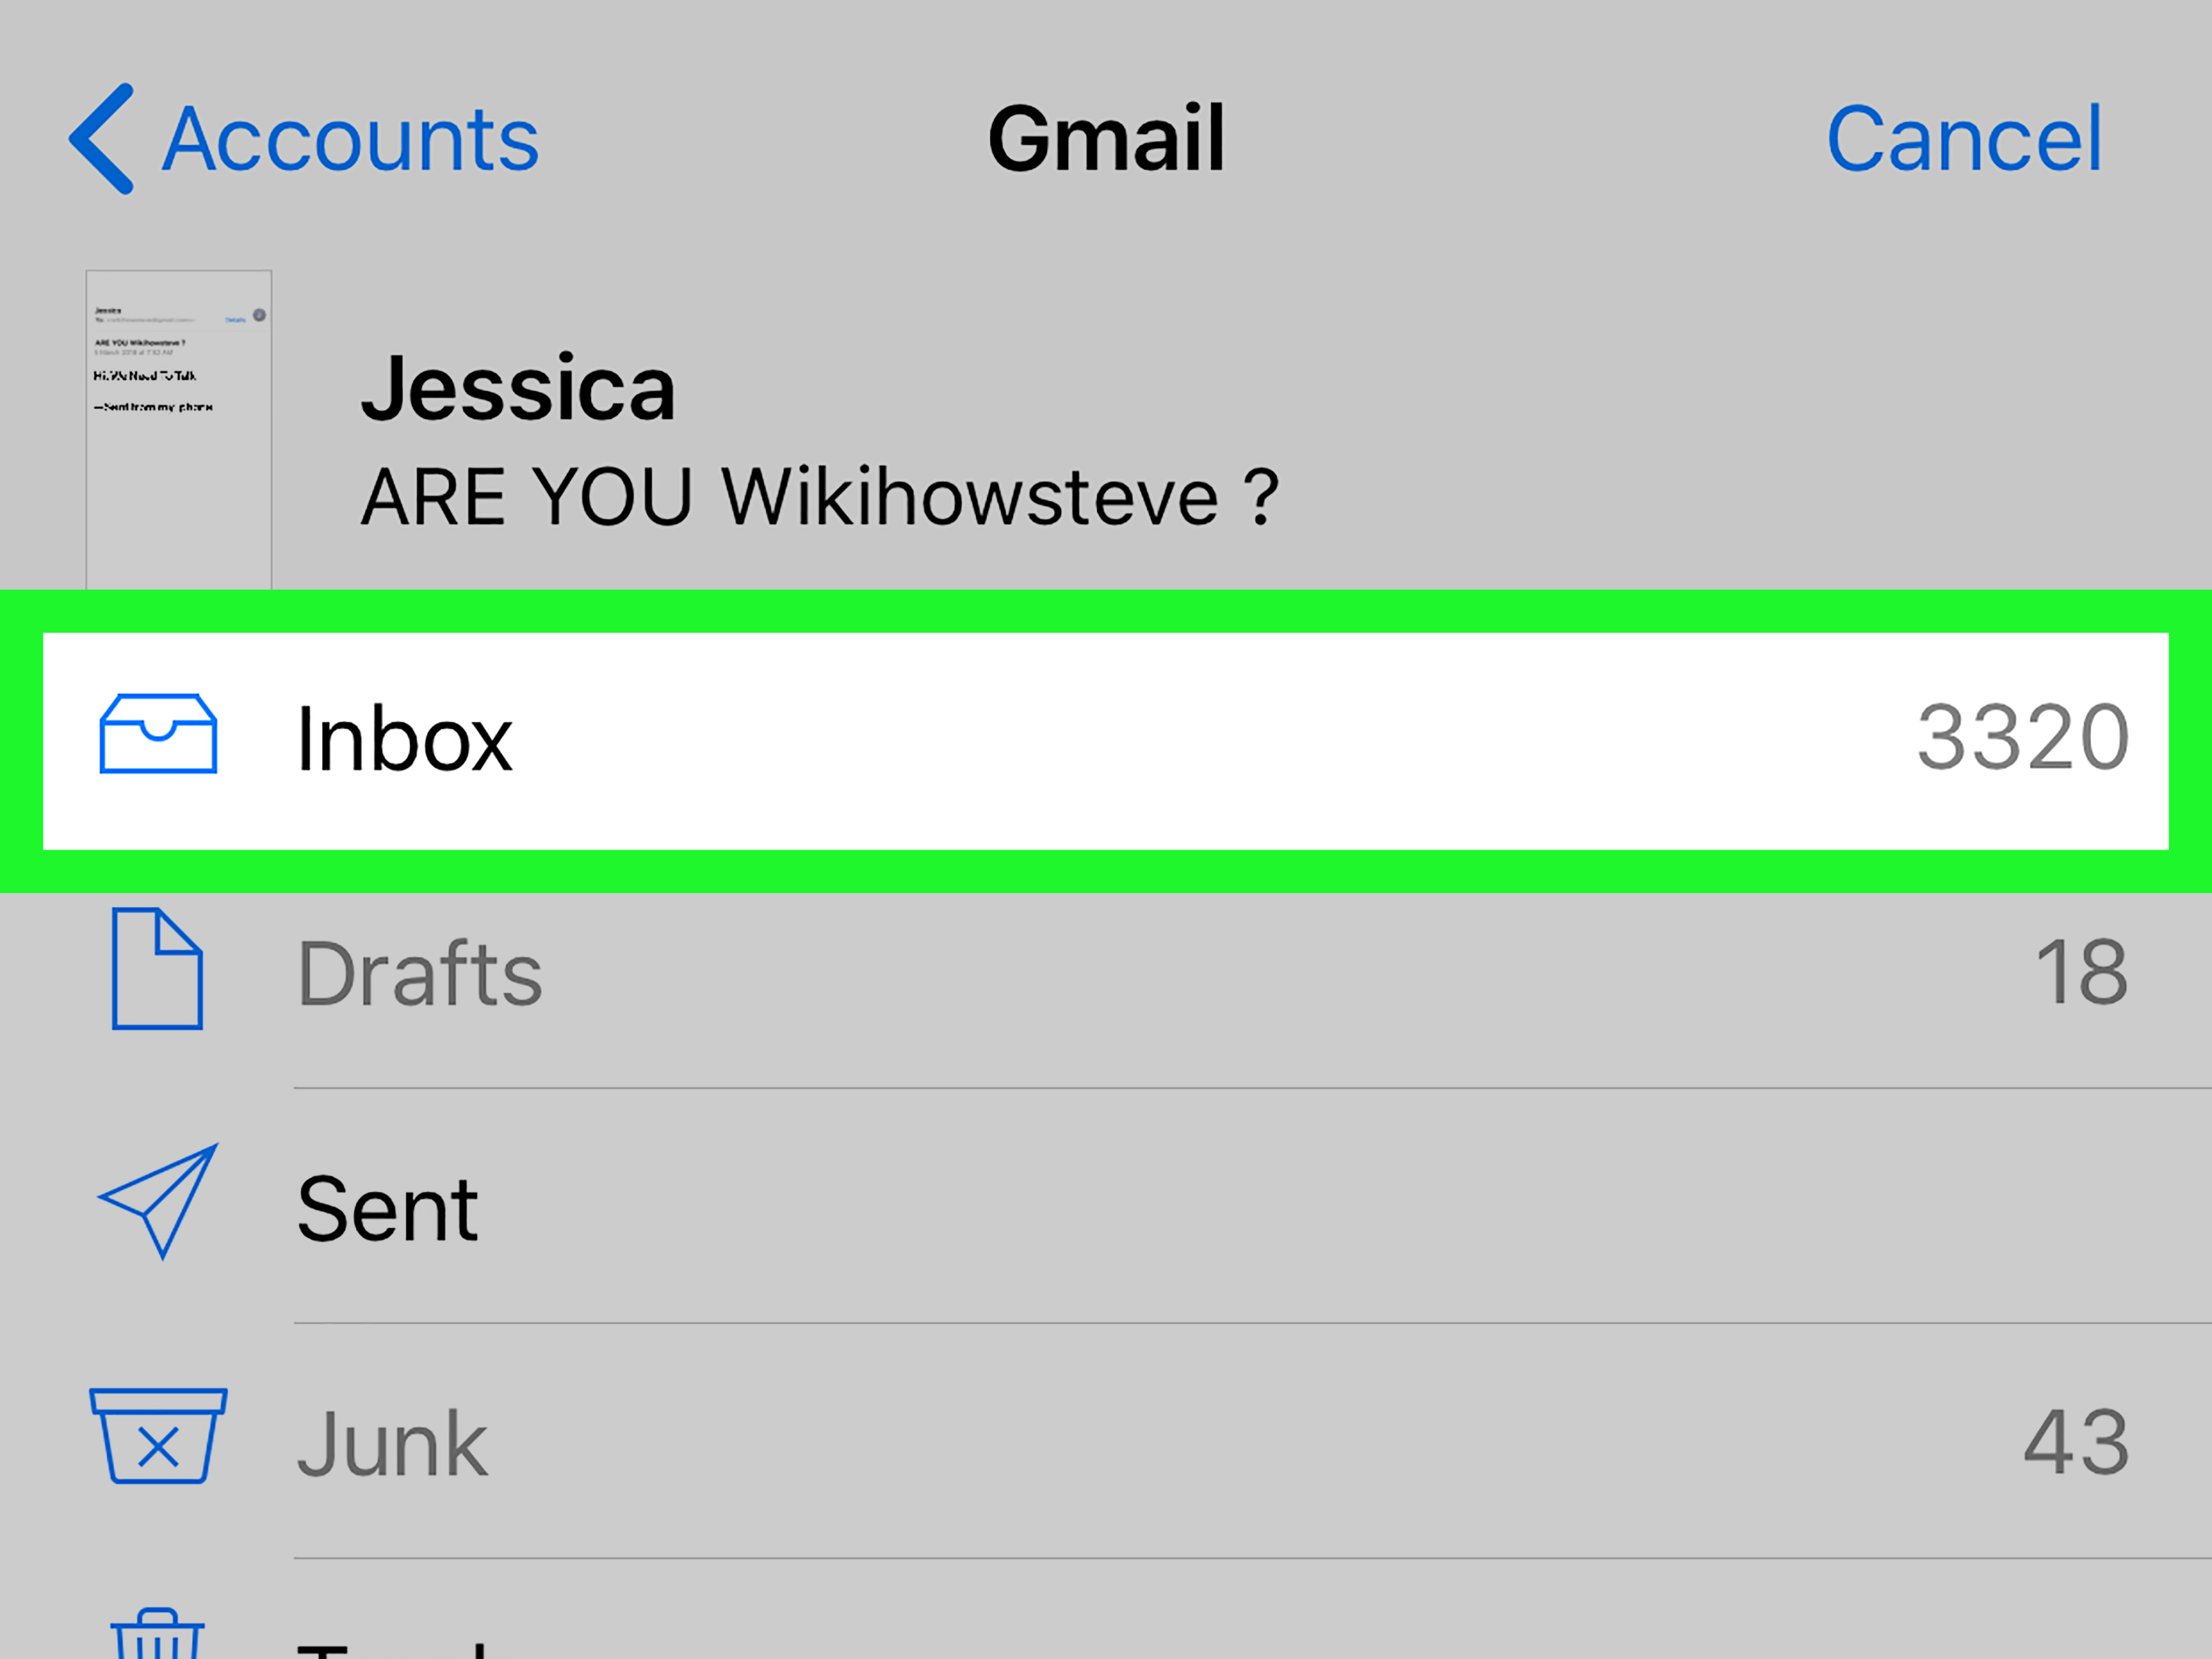 gmail junk mail folder